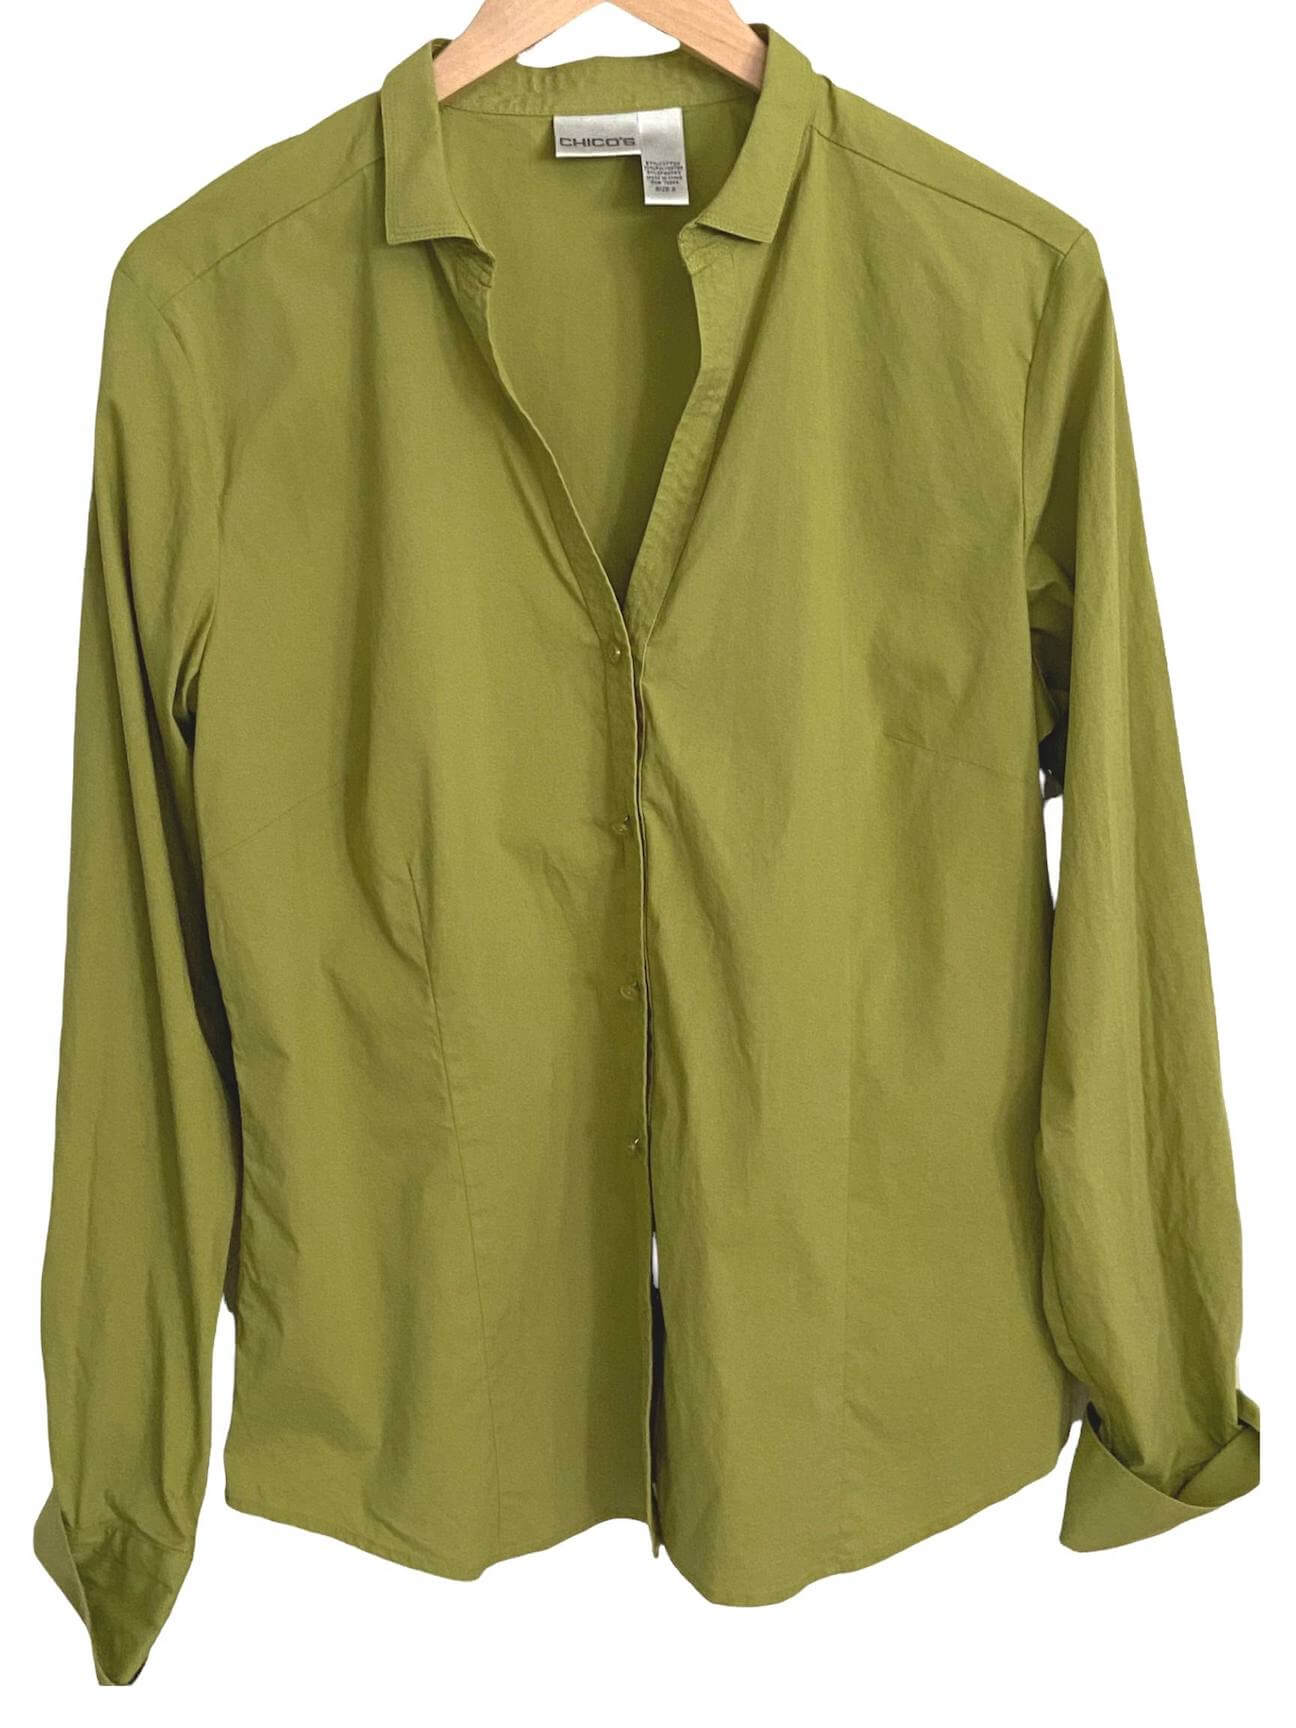 Warm Autumn CHICO'S apple green split-neck button down shirt